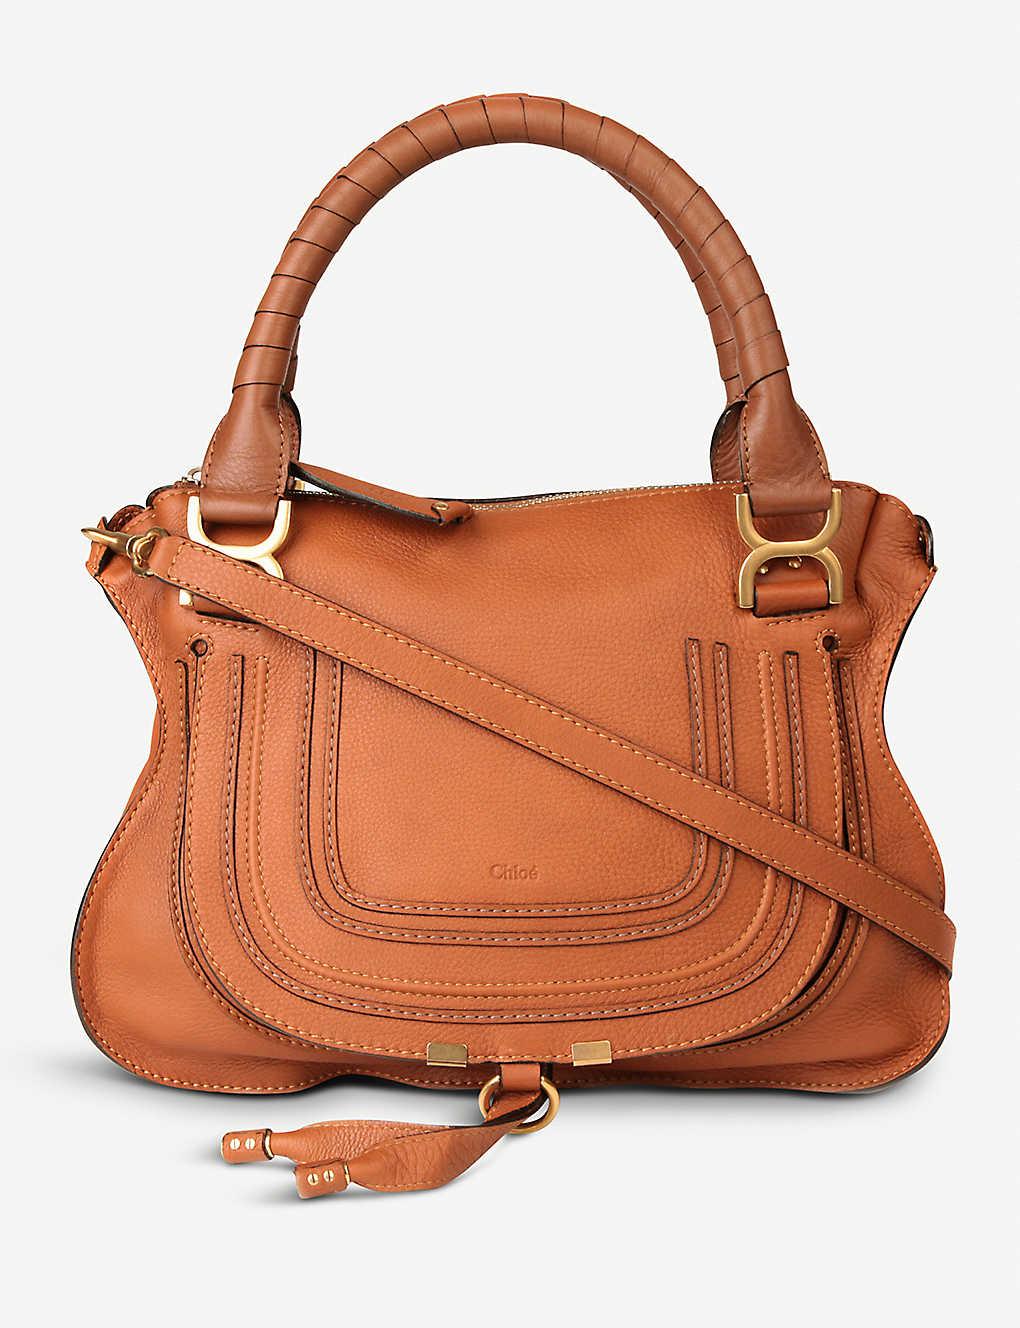 Chloé Leather Women's Tan Marcie Medium Shoulder Bag in Brown - Lyst